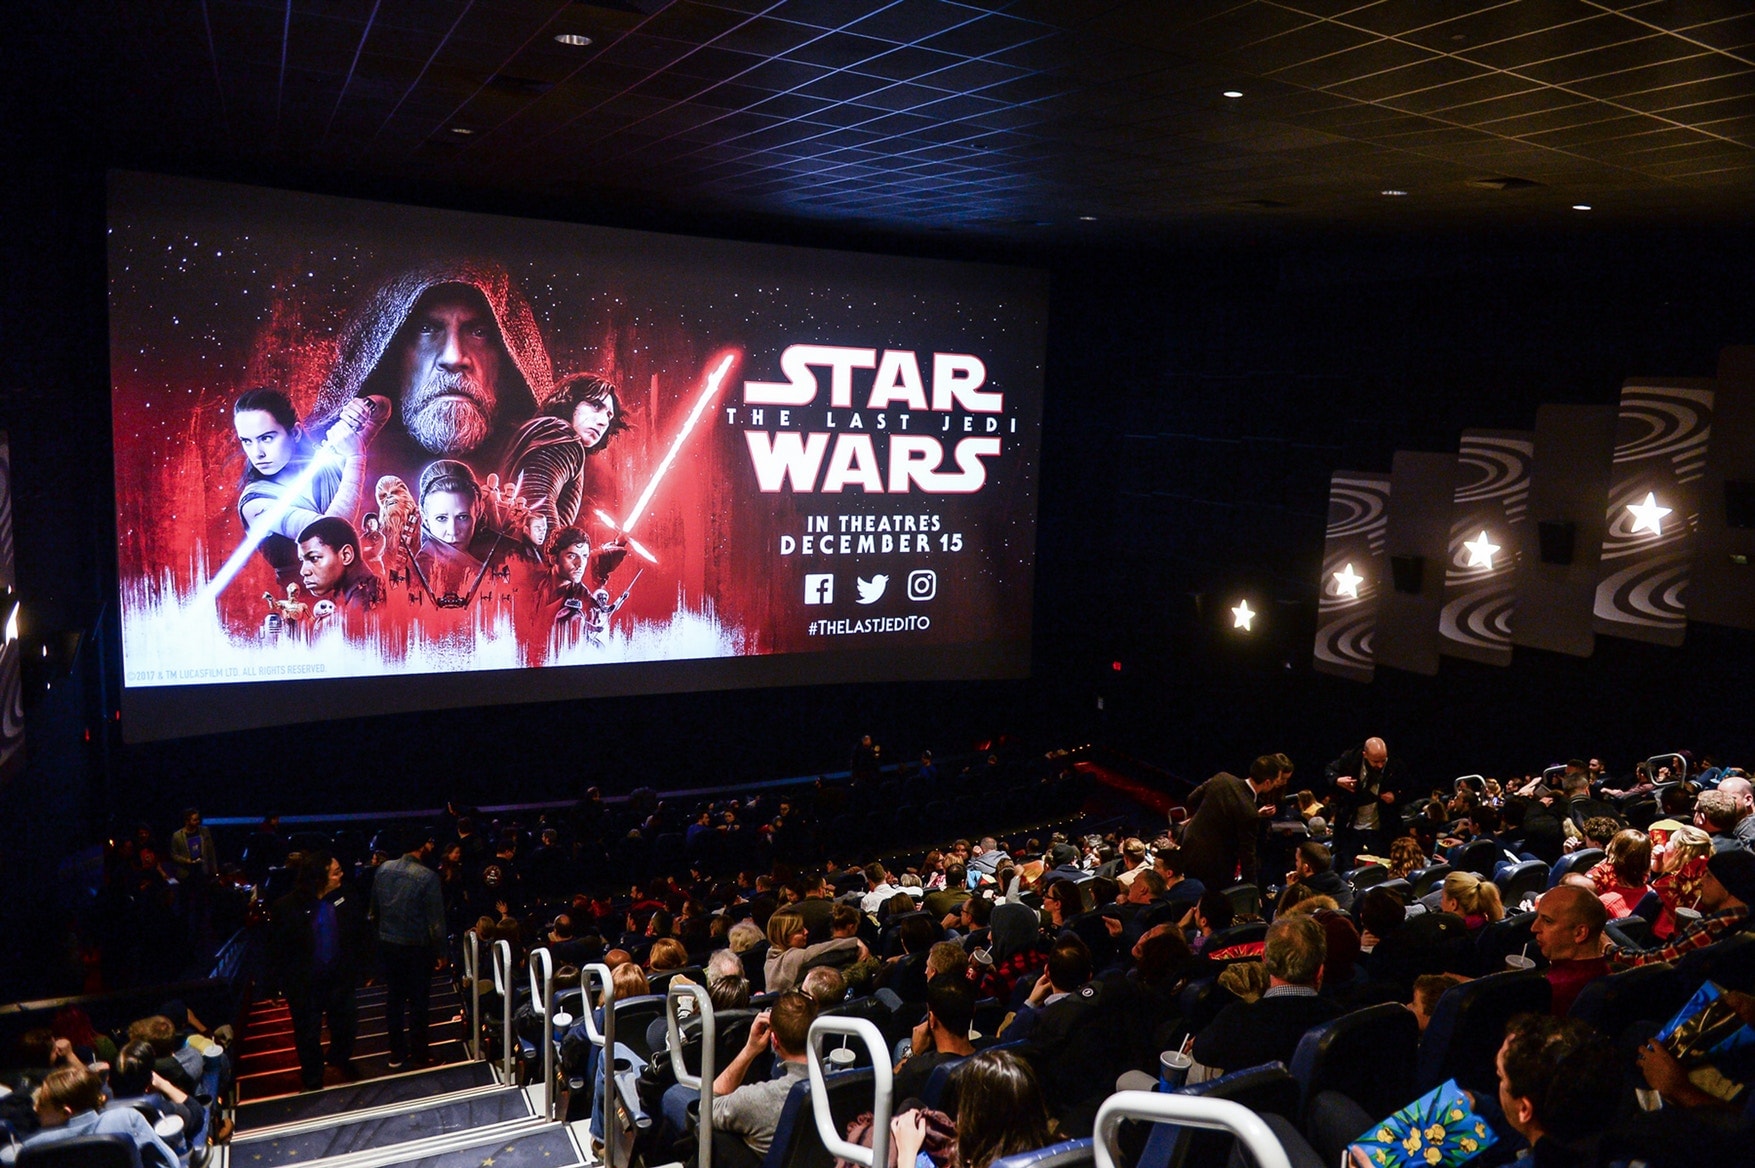 《Star Wars: The Last Jedi》開畫大收 4.5 億美元！躍升史上最高開畫票房第 5 位